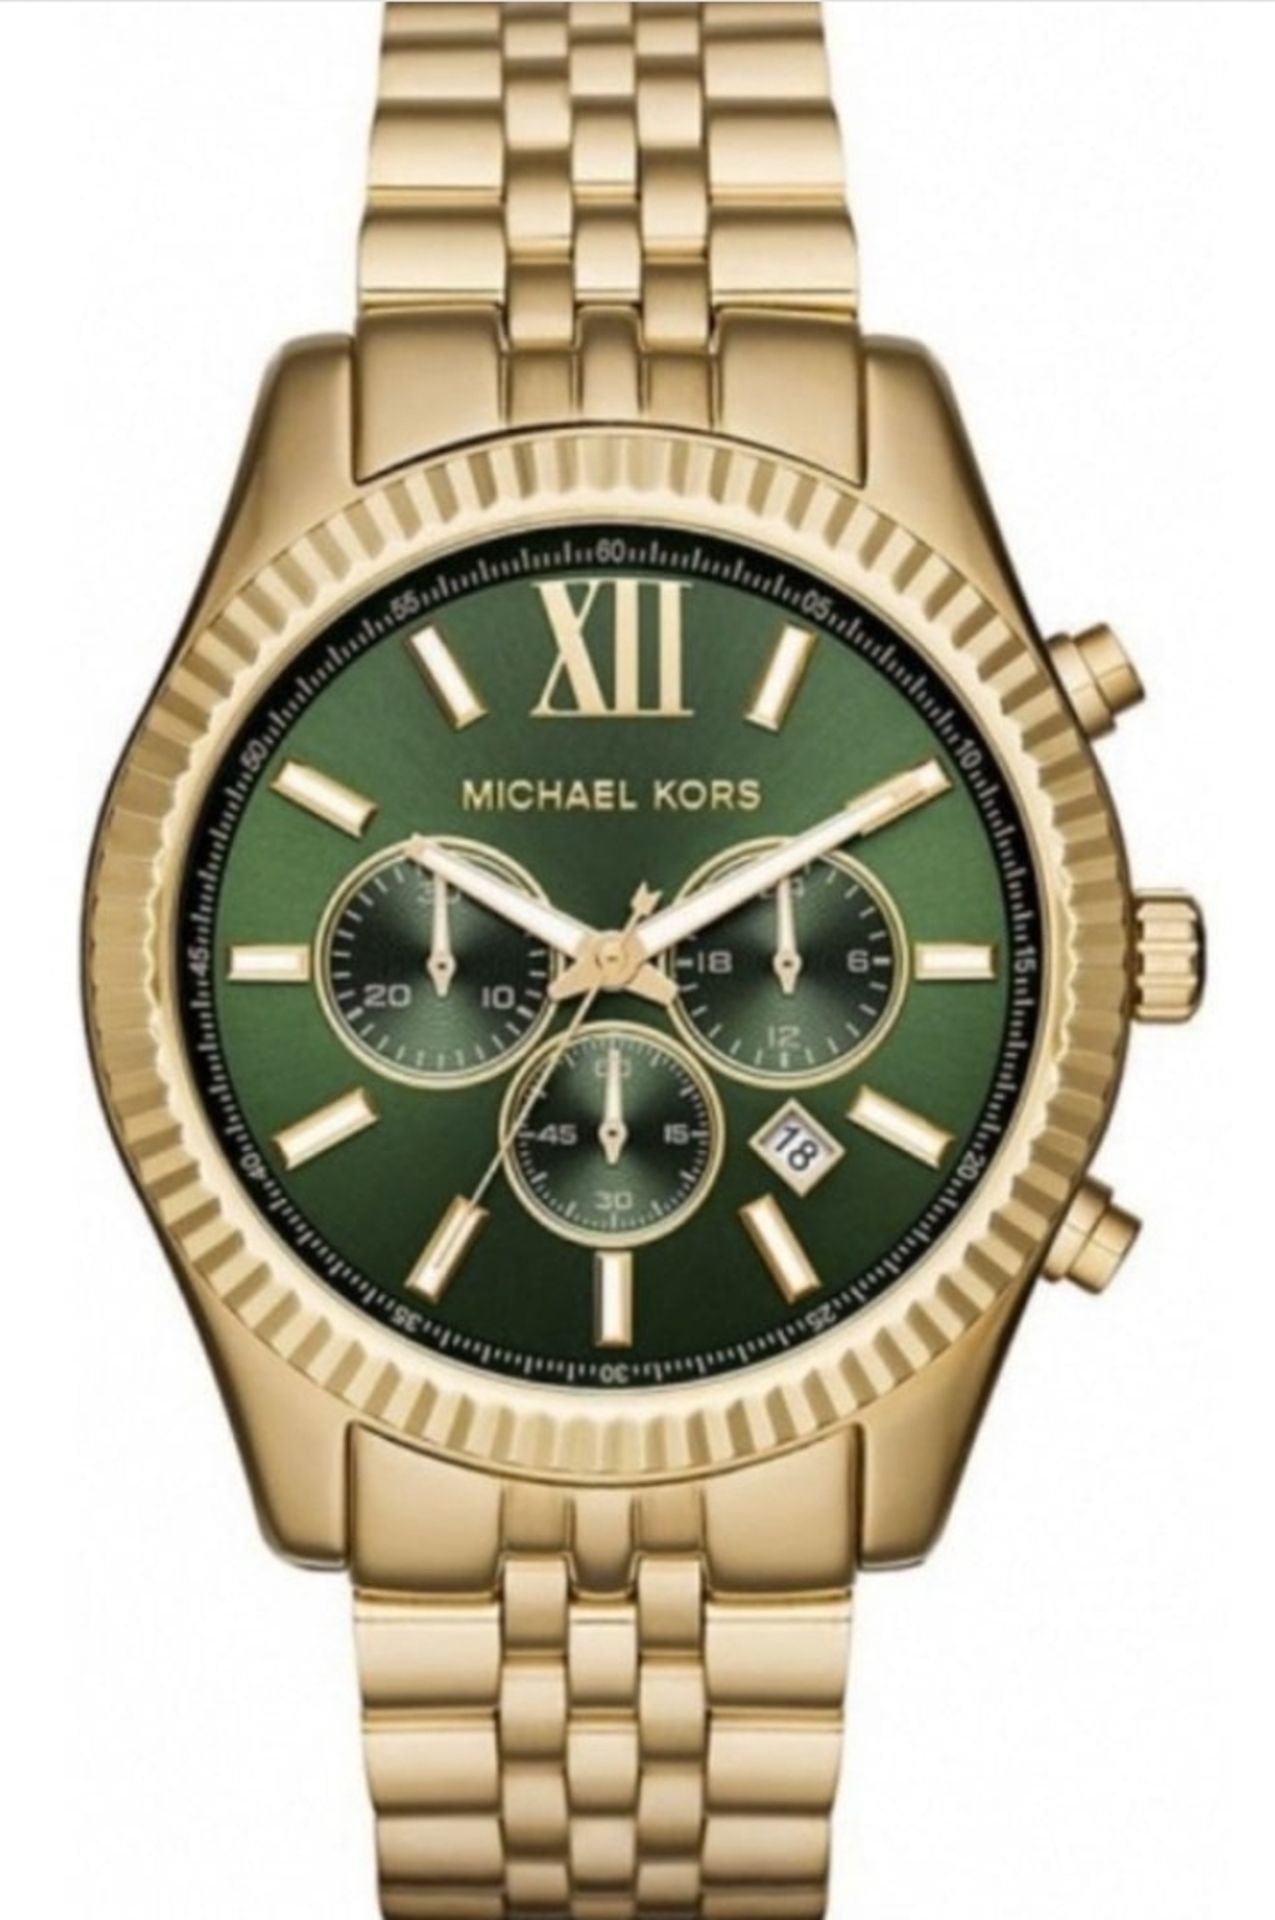 Michael Kors MK8446 Men's Lexington Watch